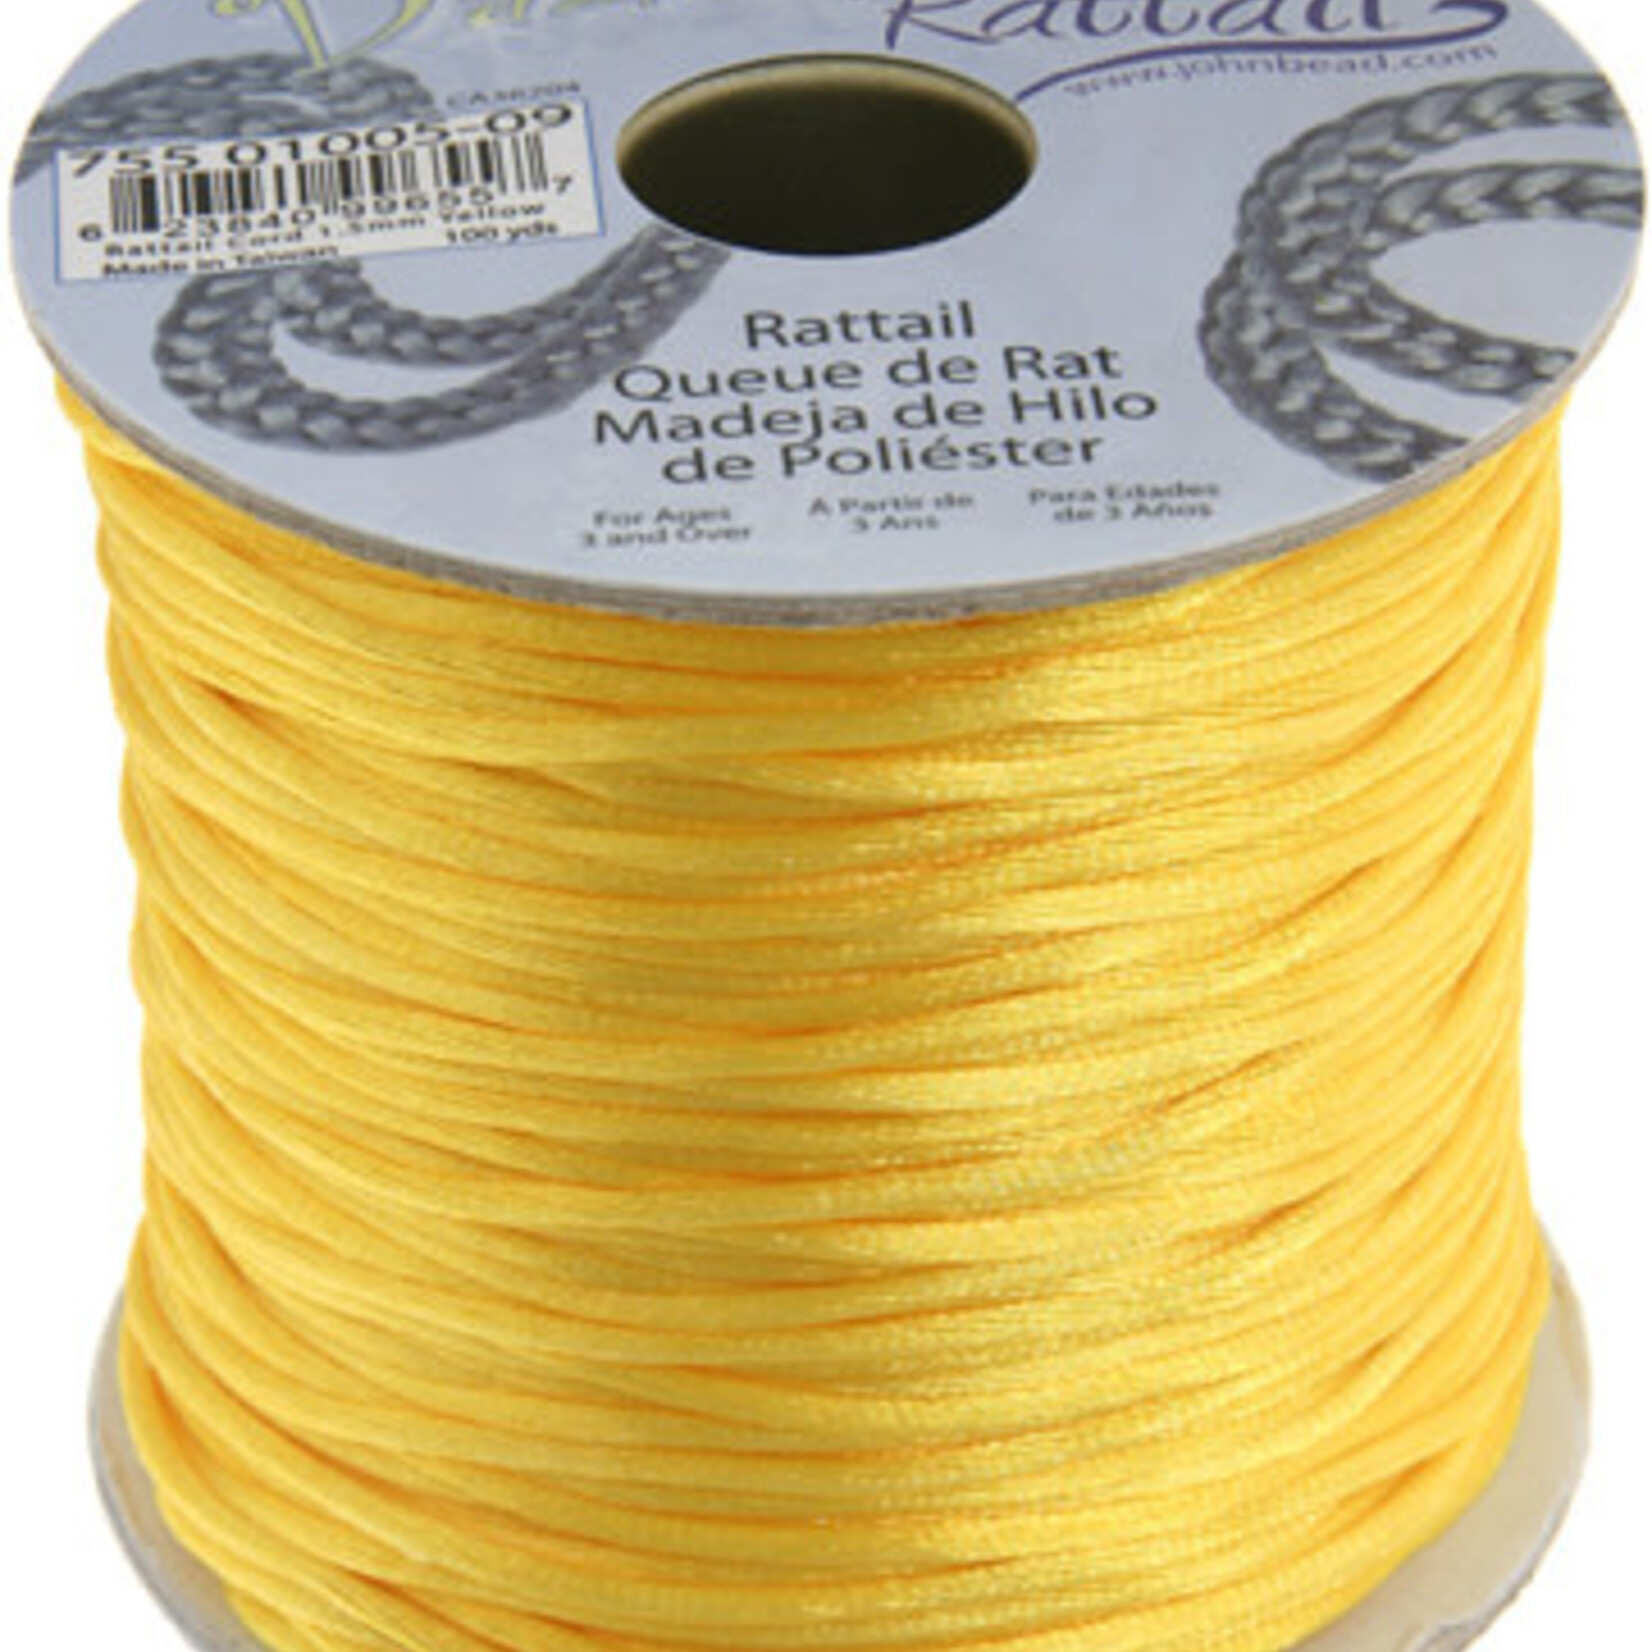 Rattail Cord 1.5mm (100 yards)  Yellow